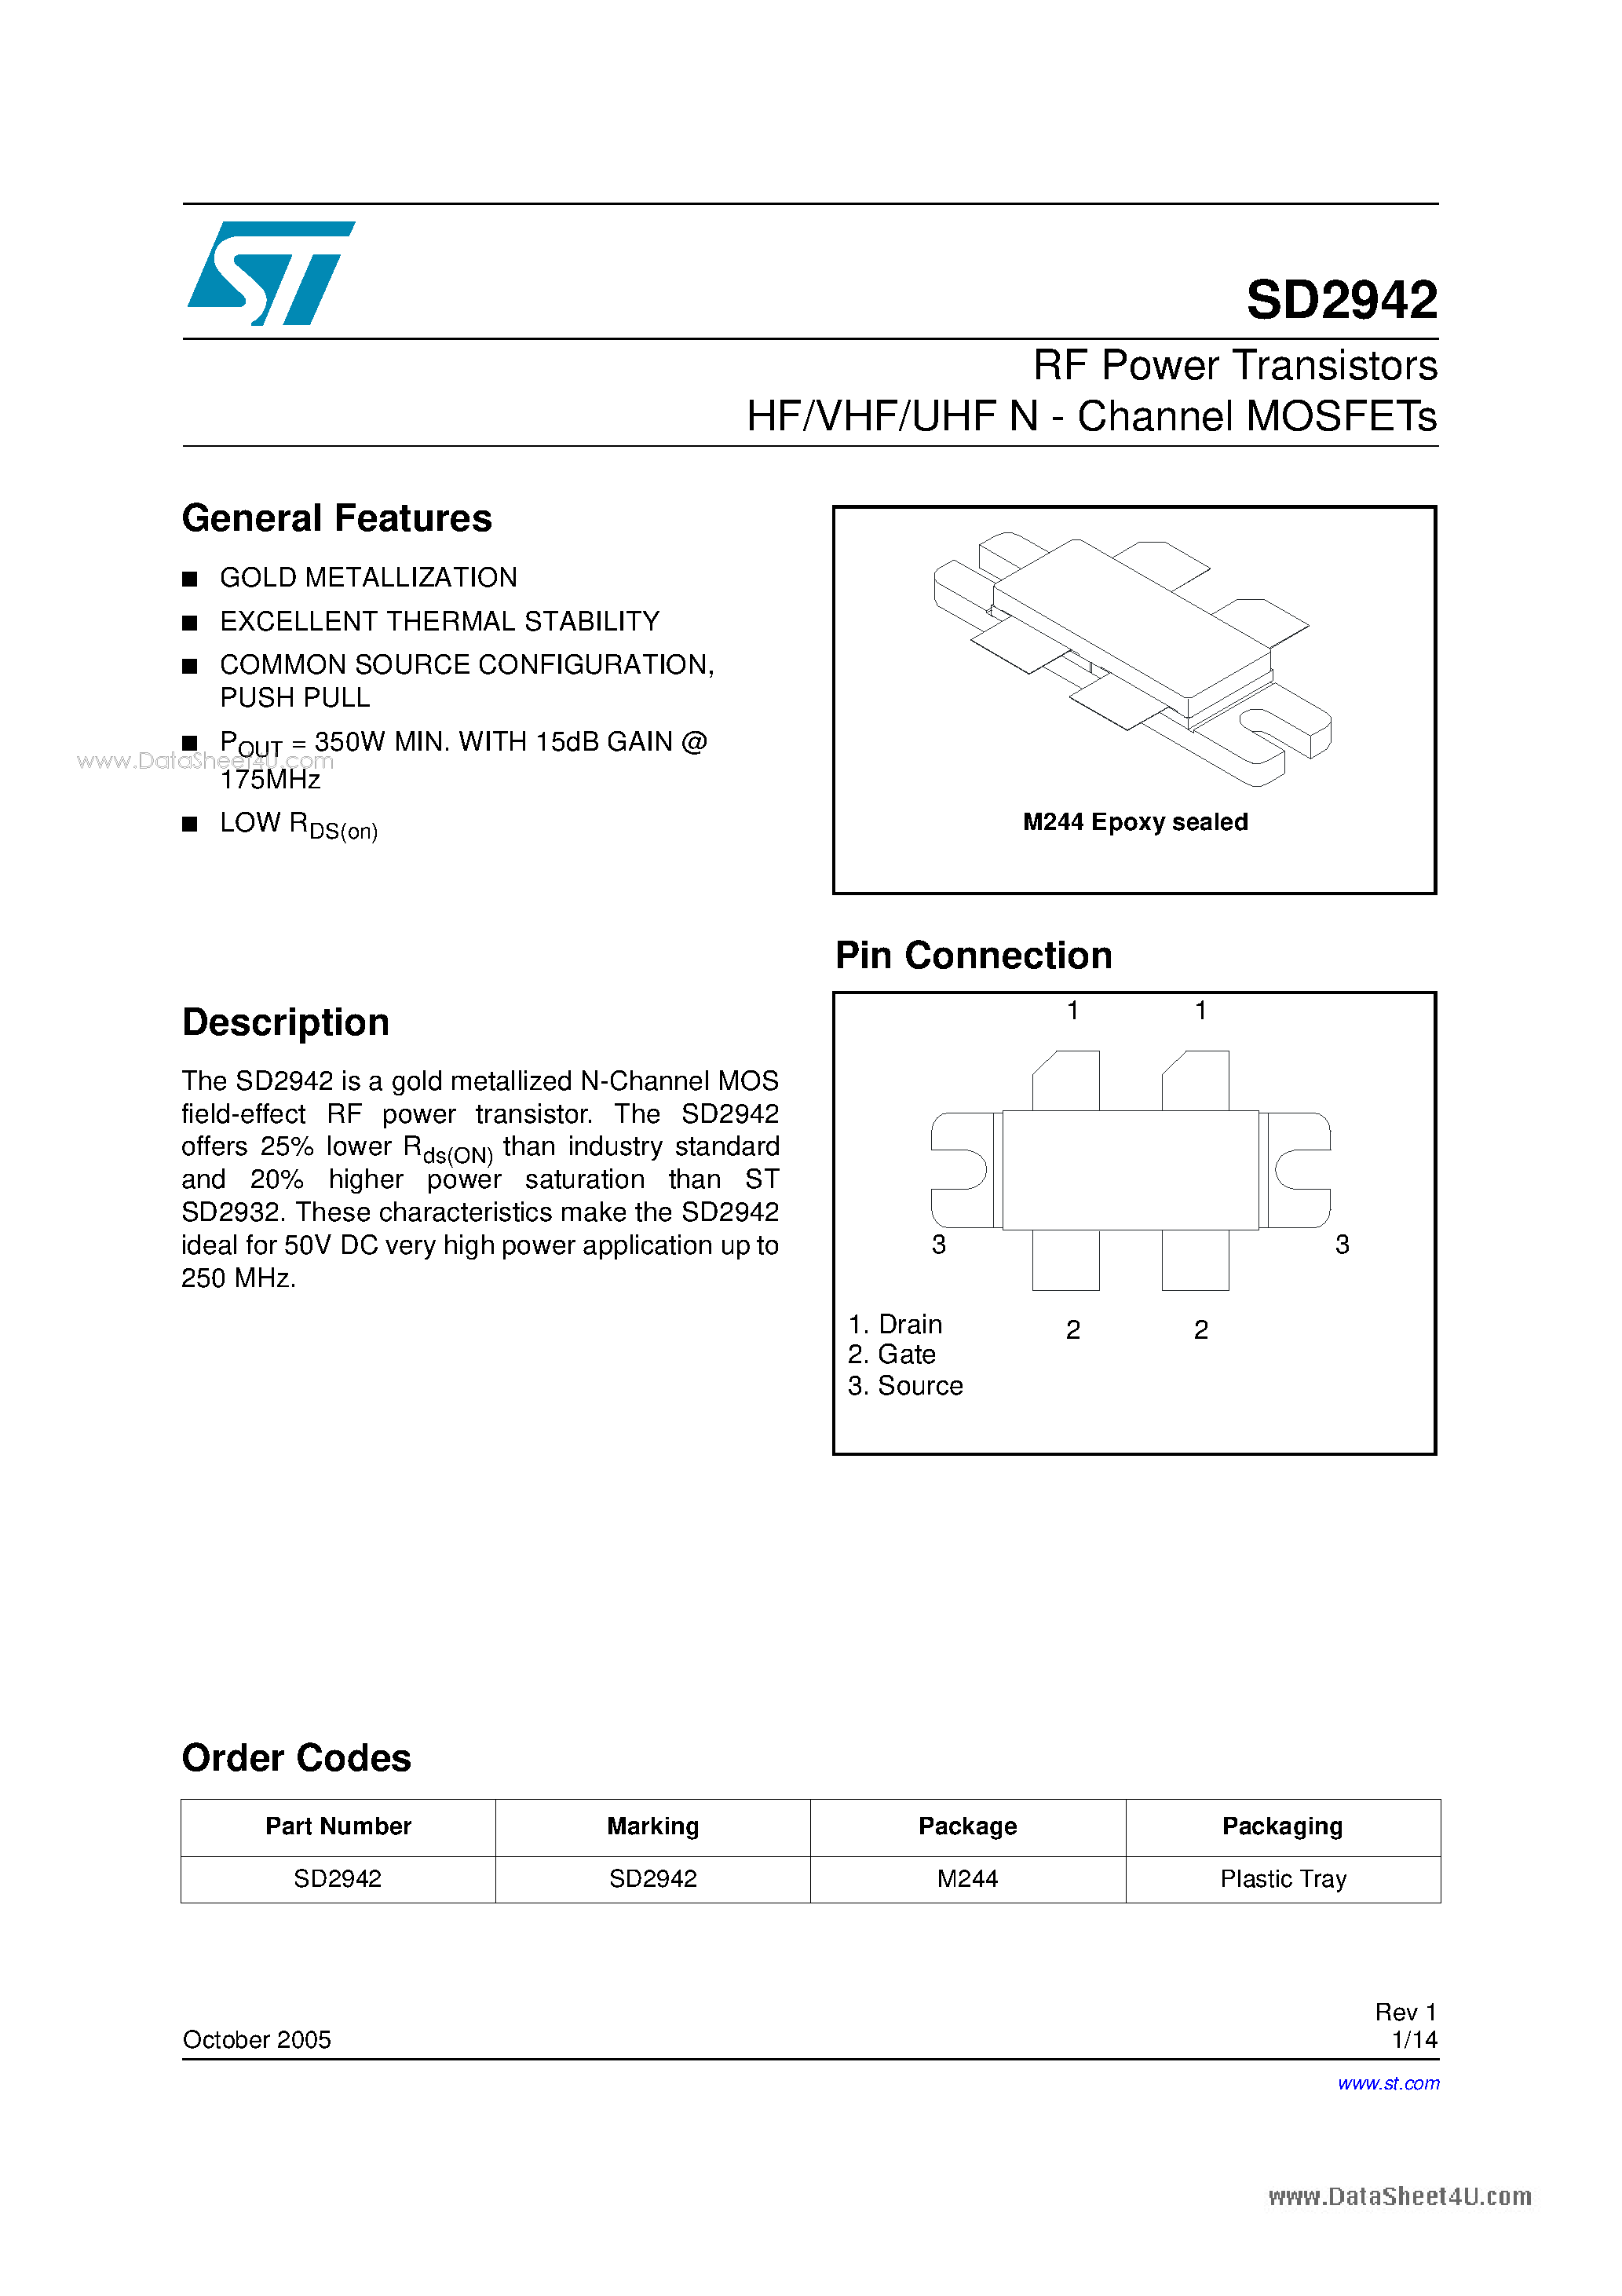 Datasheet SD2942 - RF Power Transistors HF/VHF/UHF N - Channel MOSFETs page 1